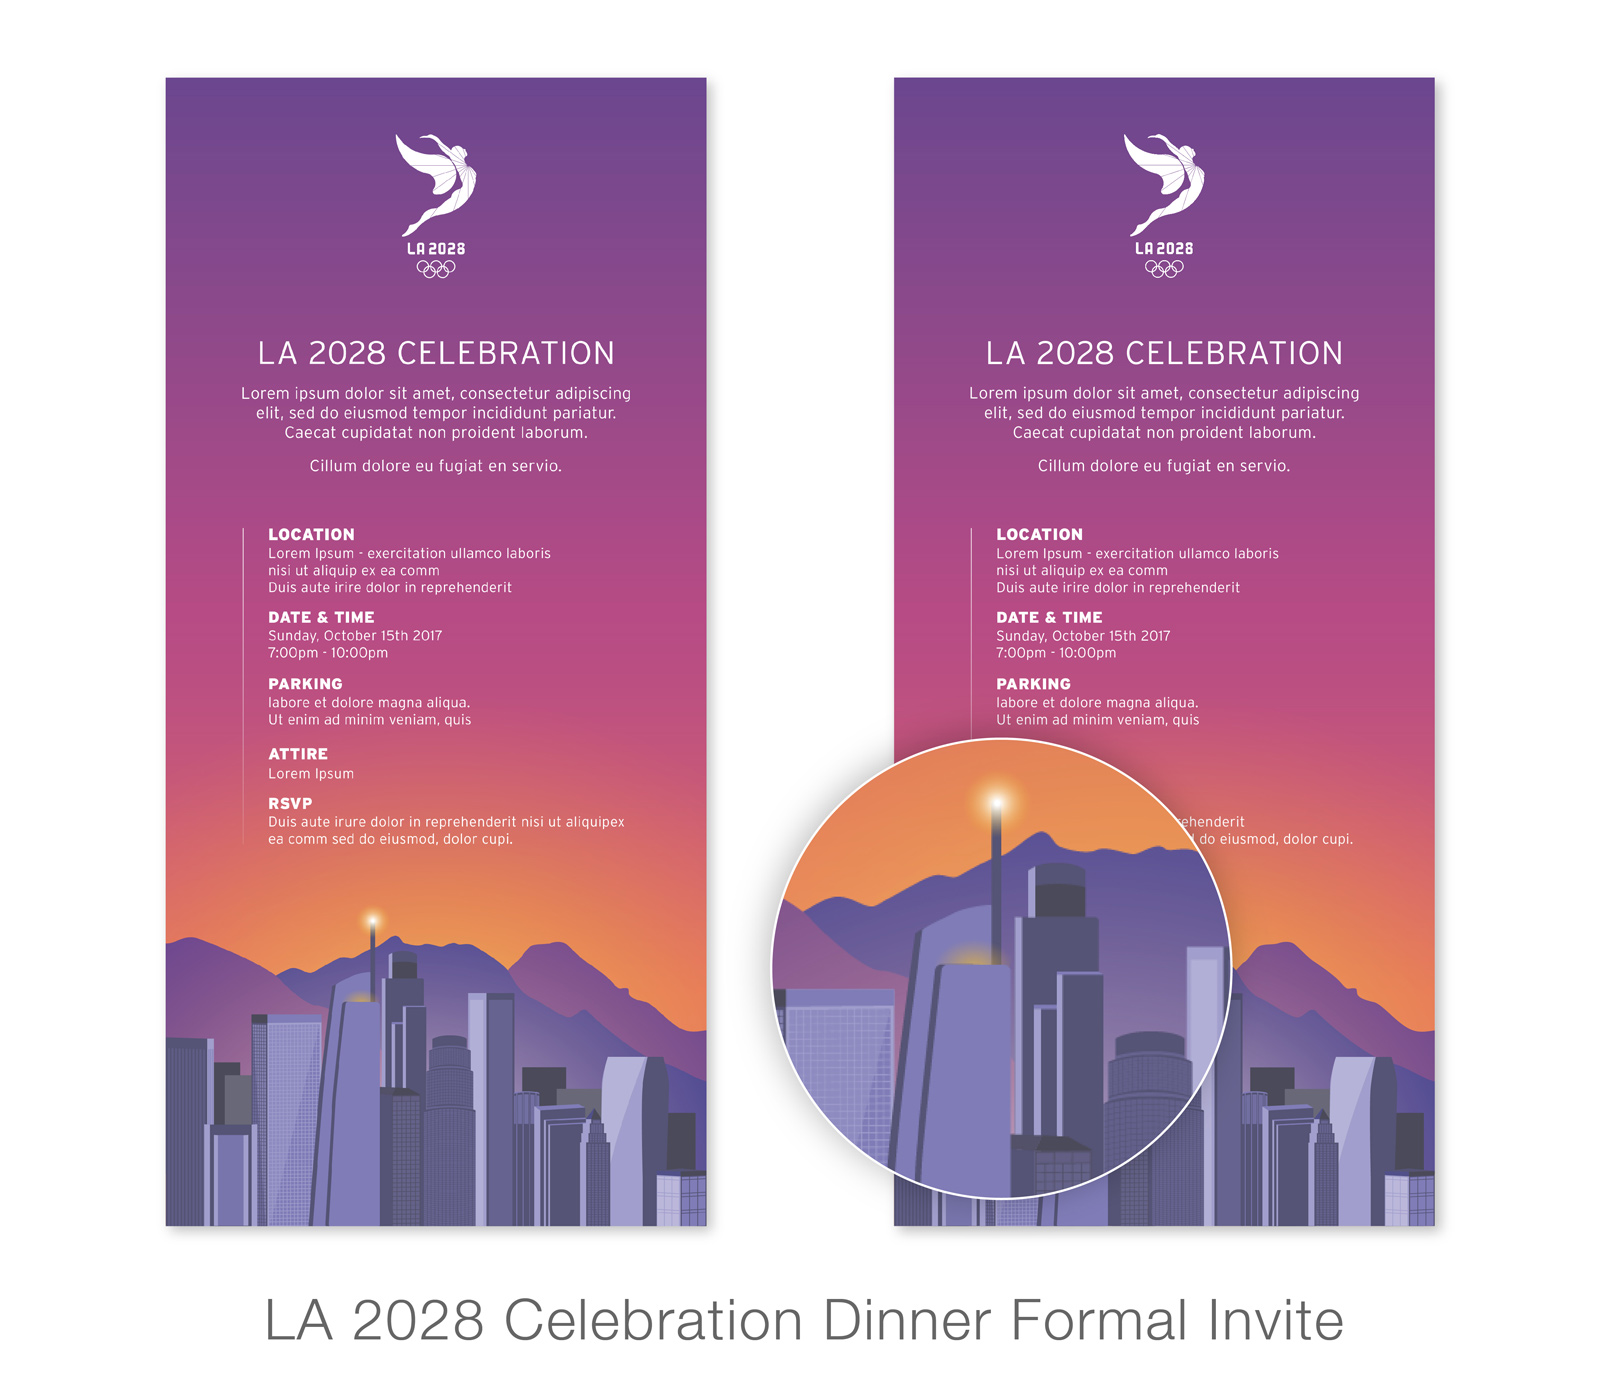 LA2028 Celebration Dinner Invite Details